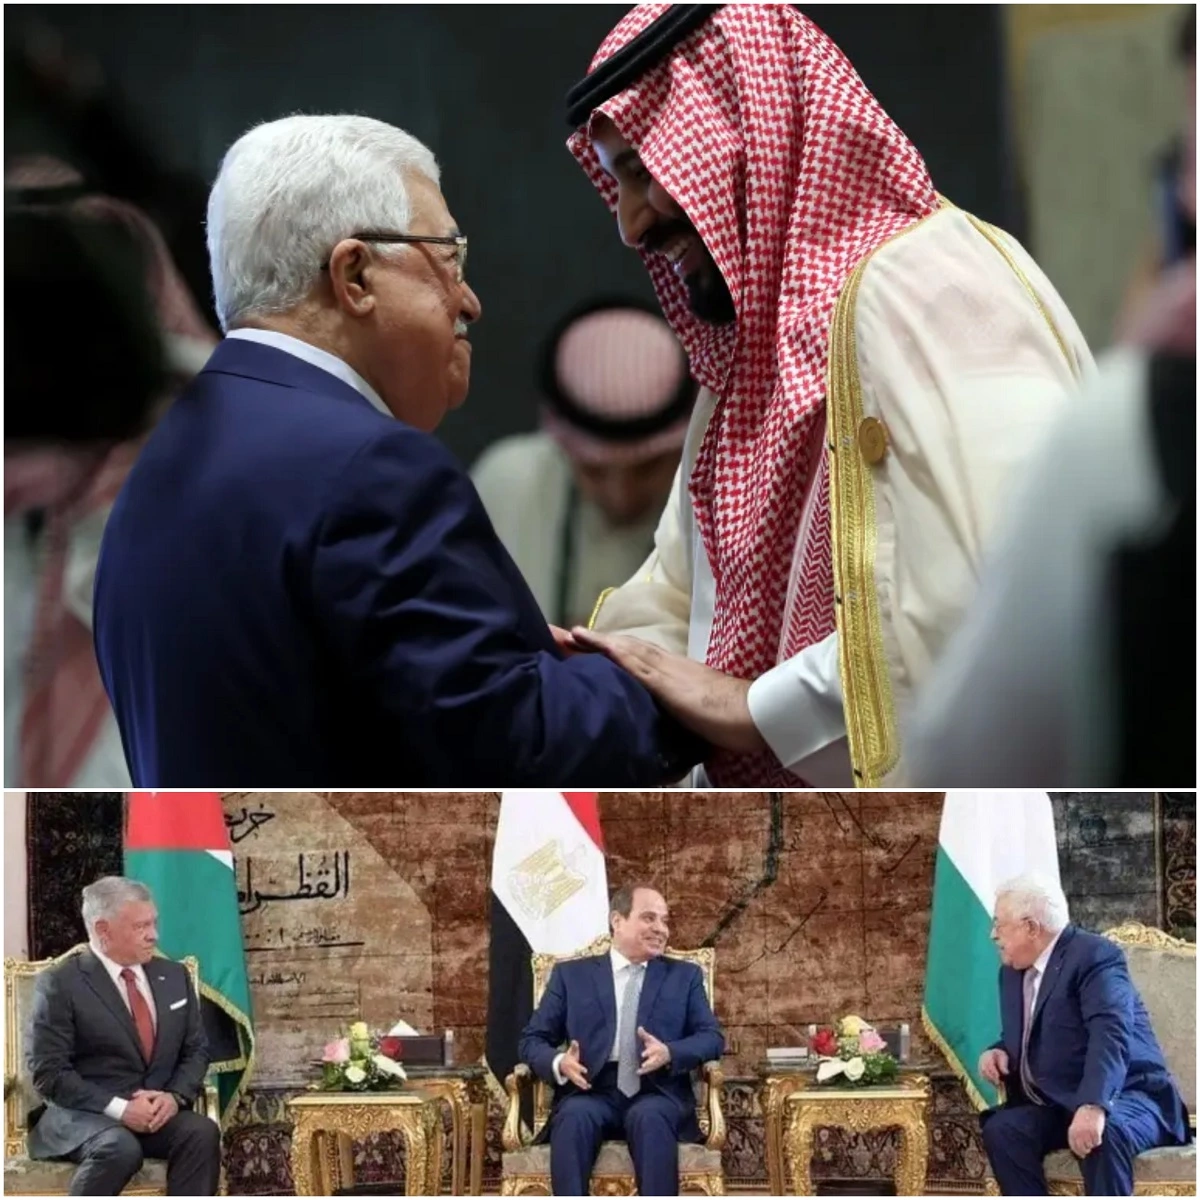 Palestinian officials welcome first Saudi Arabia ambassador: فلسطین کیلئے ”اچھے دن‘‘ کی تیاری میں سعودی عرب کا تاریخی قدم، مصر بھی ہوا سرگرم